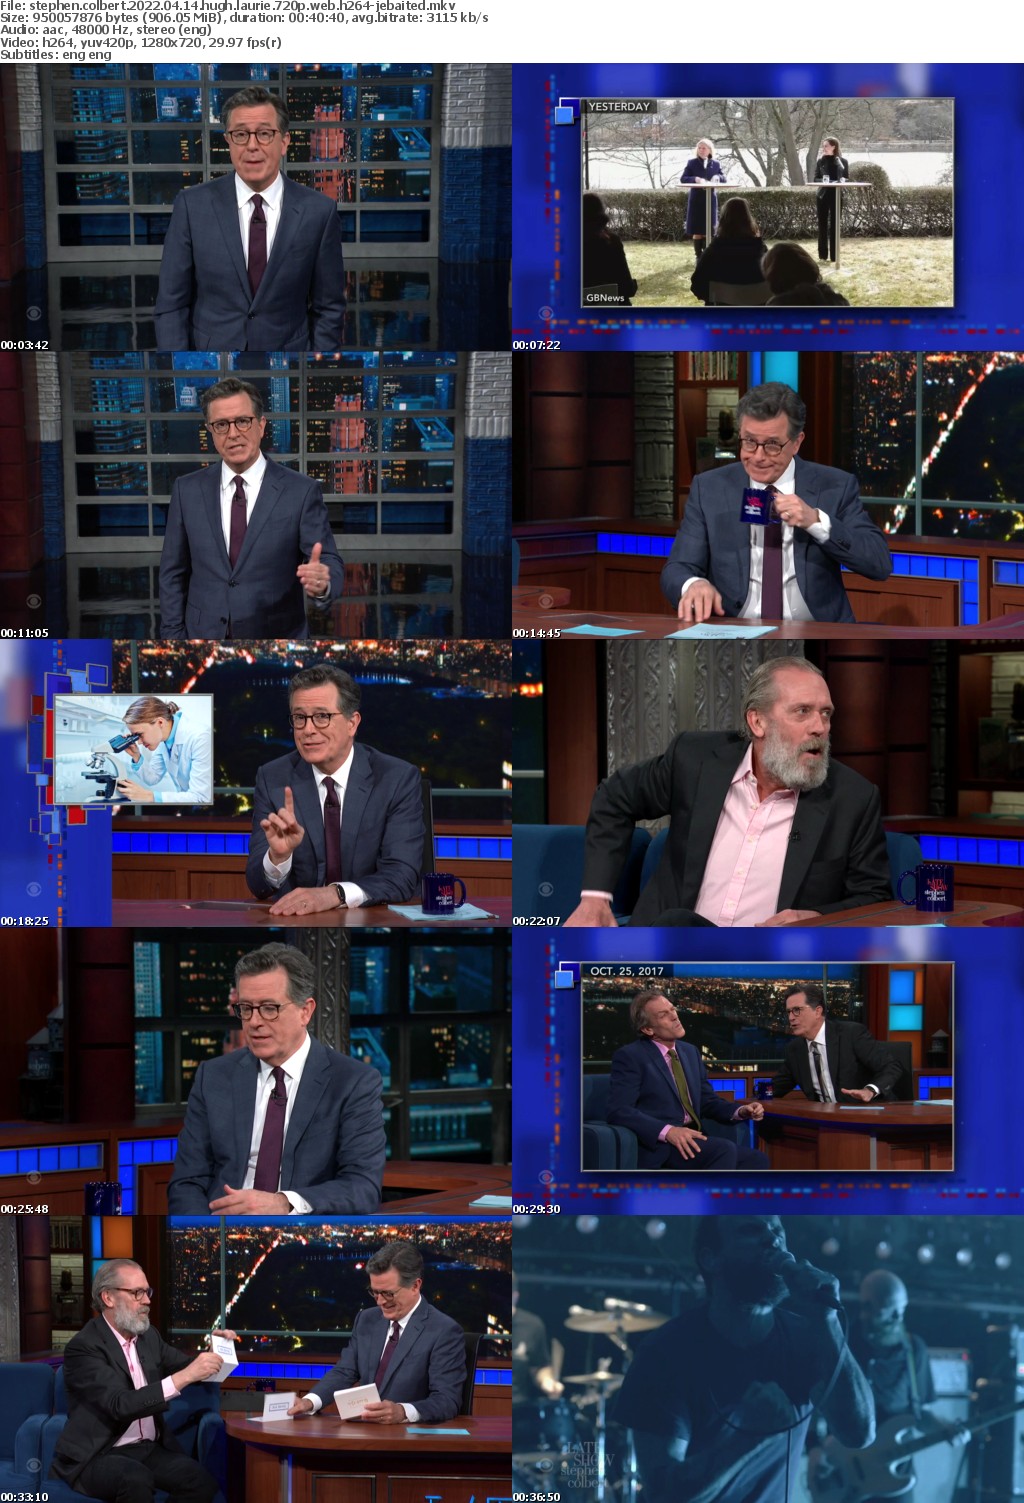 Stephen Colbert 2022 04 14 Hugh Laurie 720p WEB H264-JEBAITED